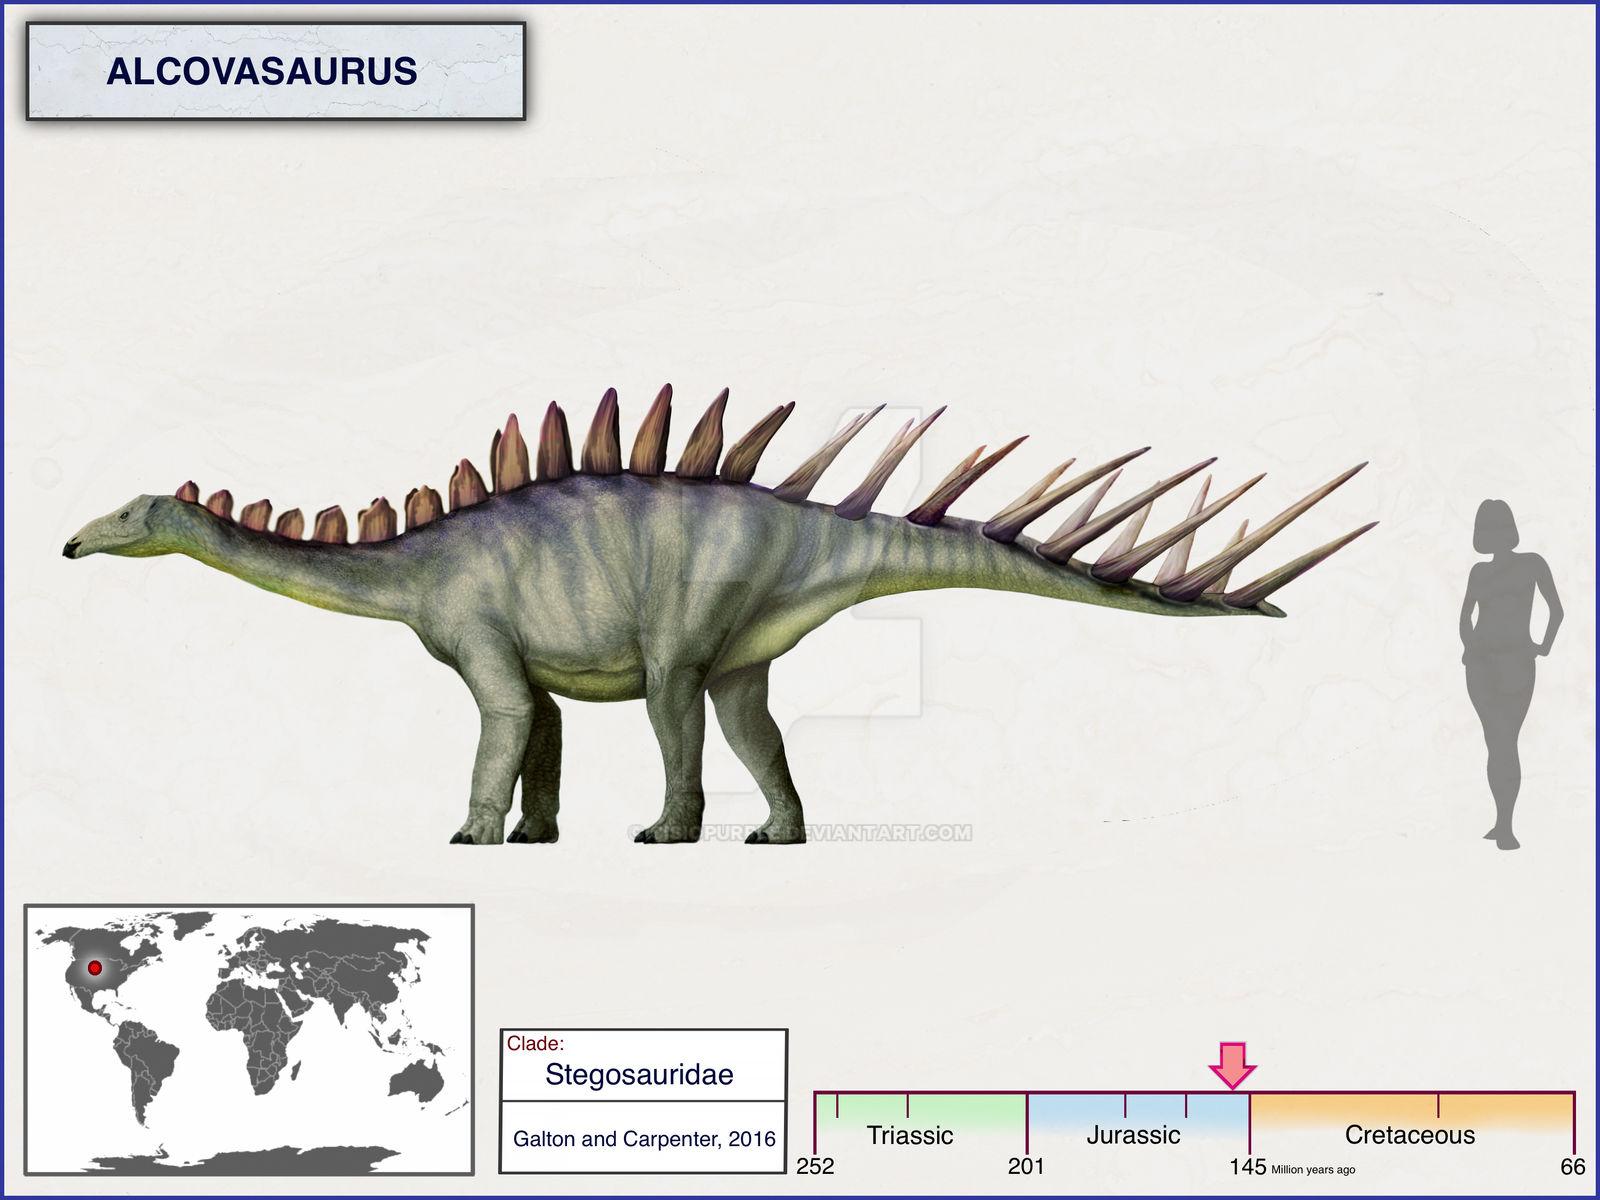 alcovasaurus_by_cisiopurple_dcw09s5-fullview.jpg